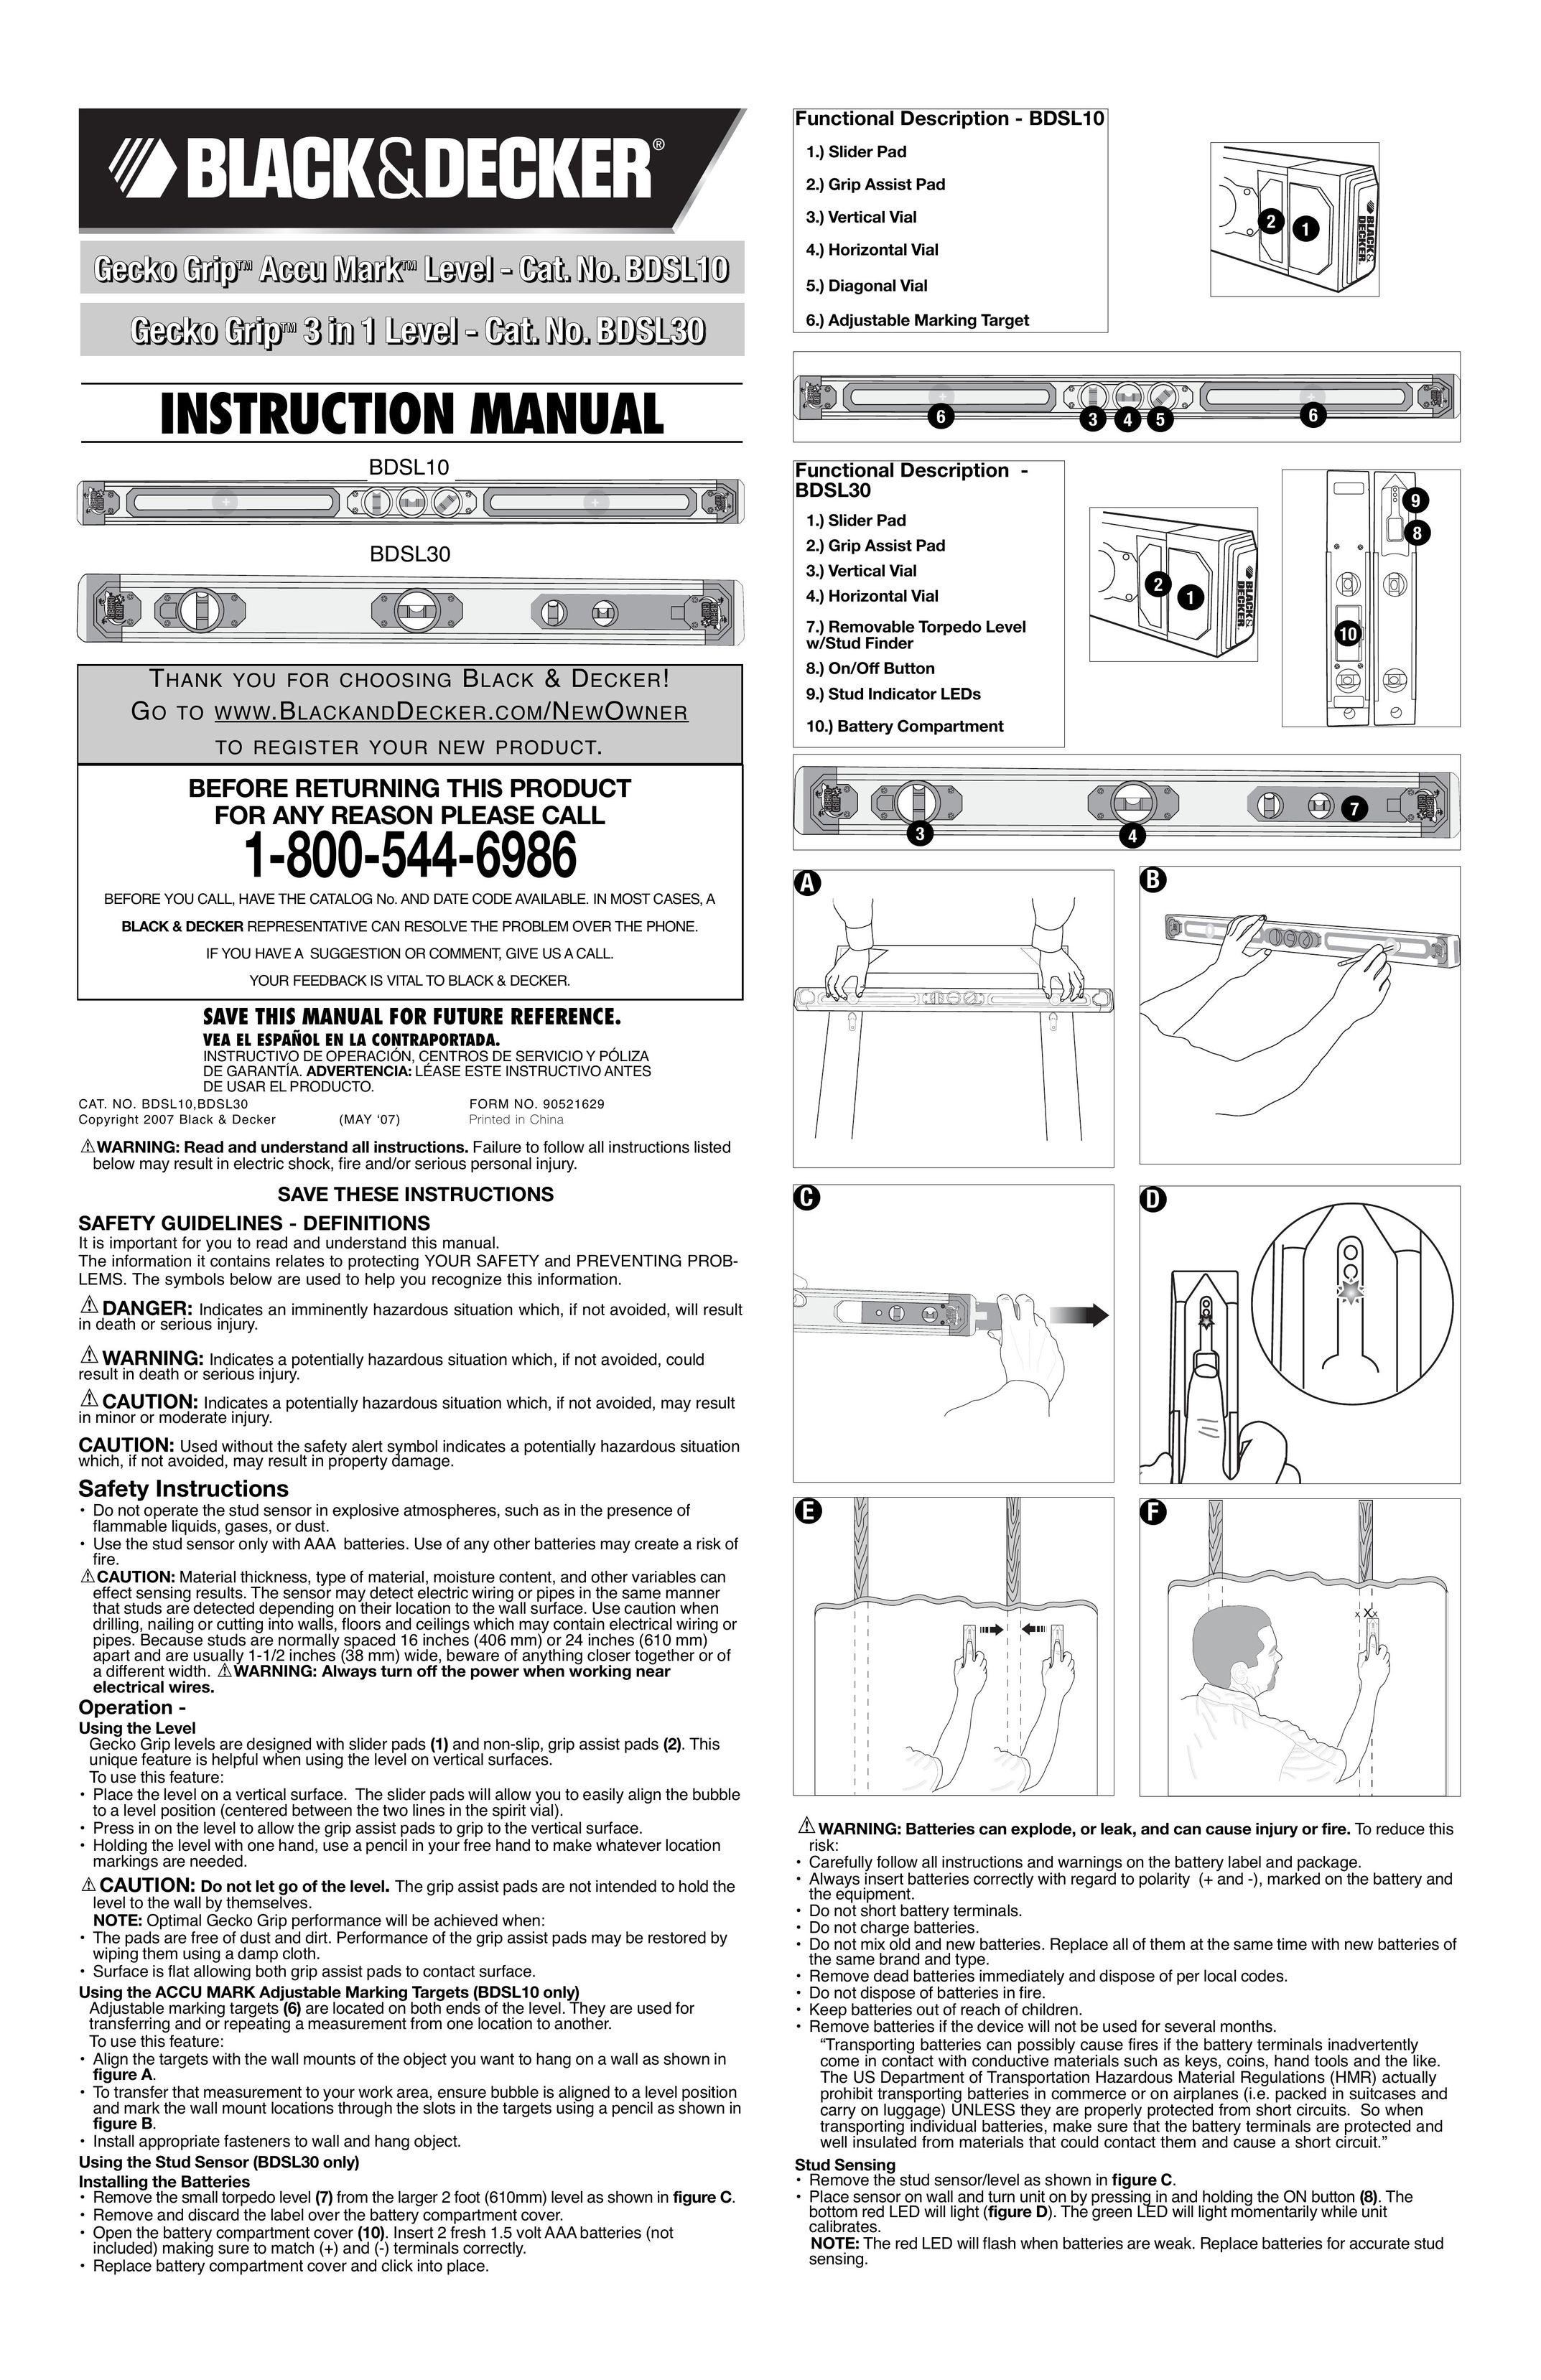 Black & Decker BDSL10 Freezer User Manual